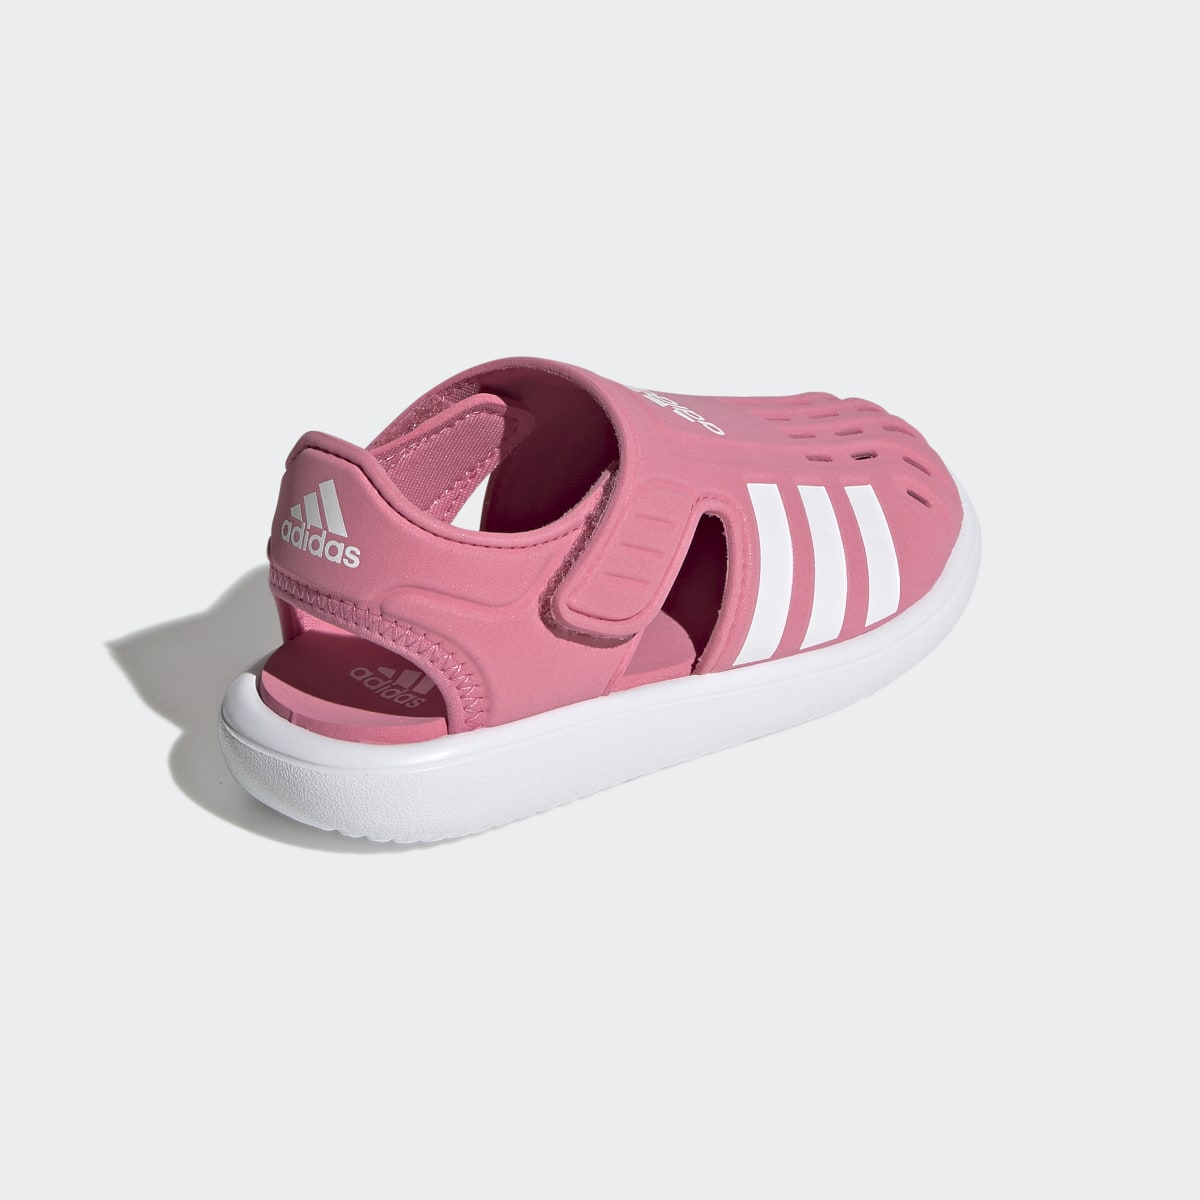 Adidas Summer Closed Toe Water Sandals. 6